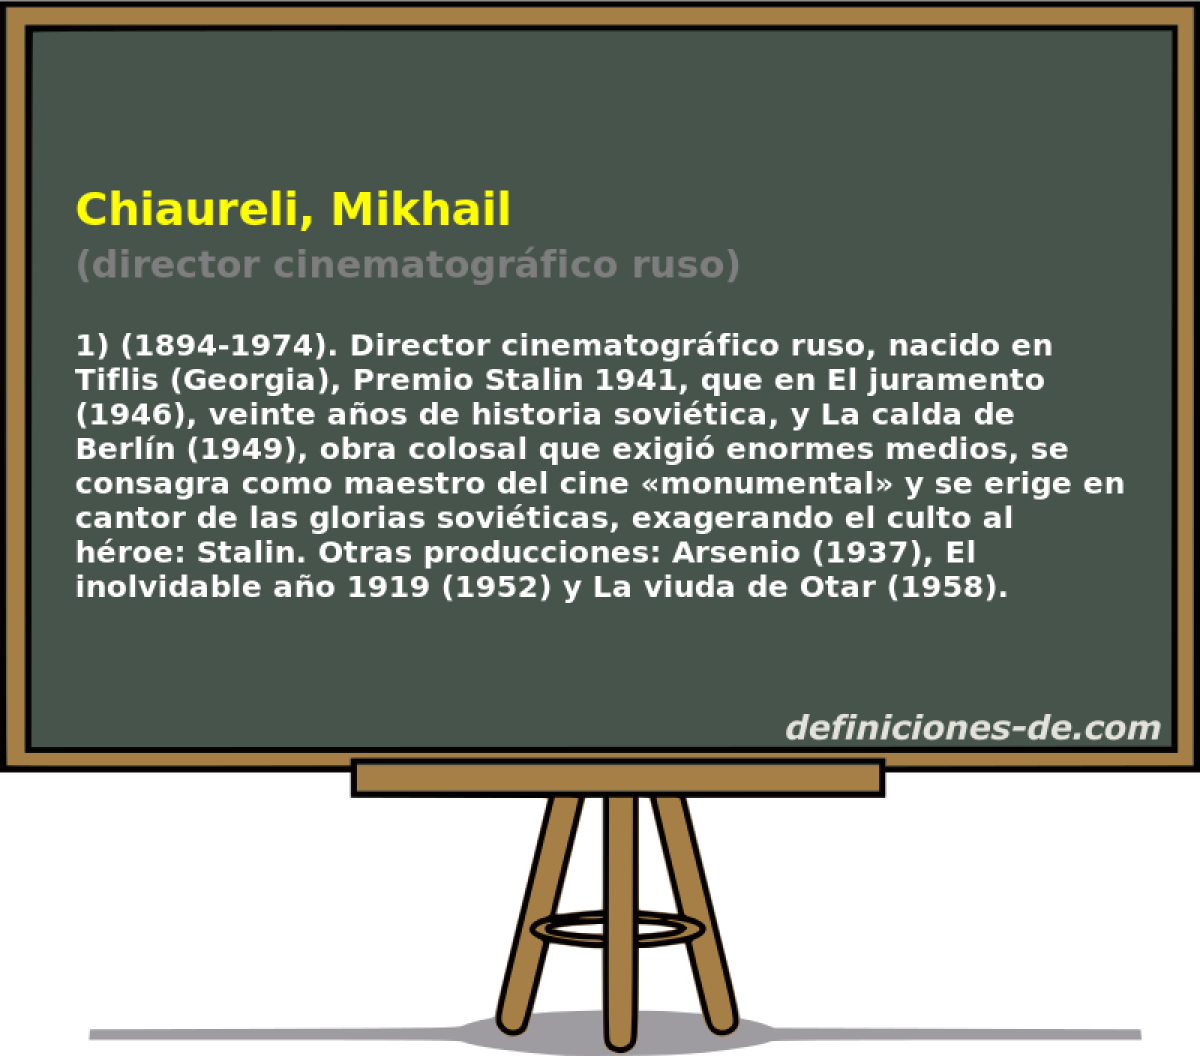 Chiaureli, Mikhail (director cinematogrfico ruso)